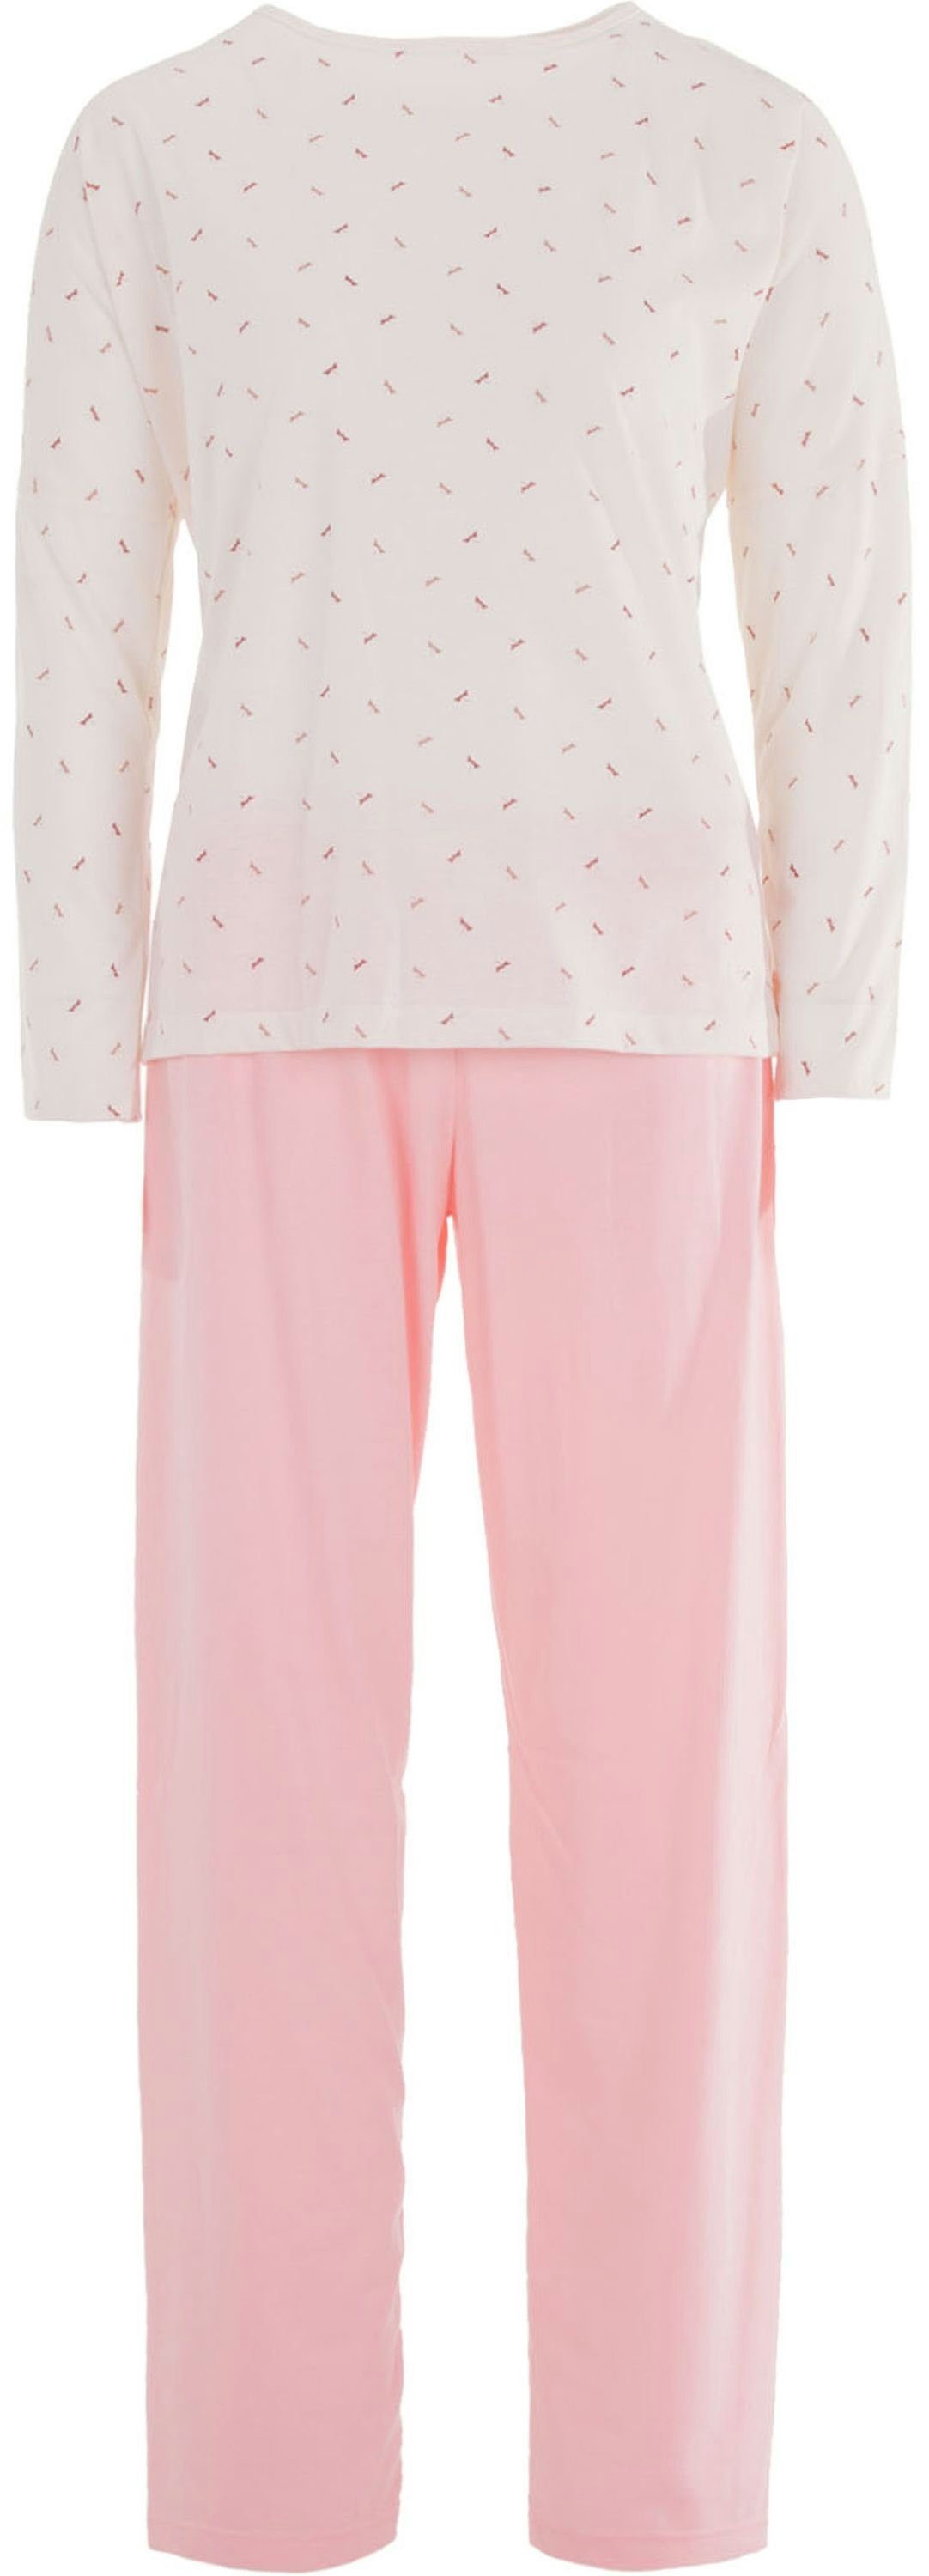 zeitlos Schlafanzug Pyjama Set Langarm - Libelle rosa